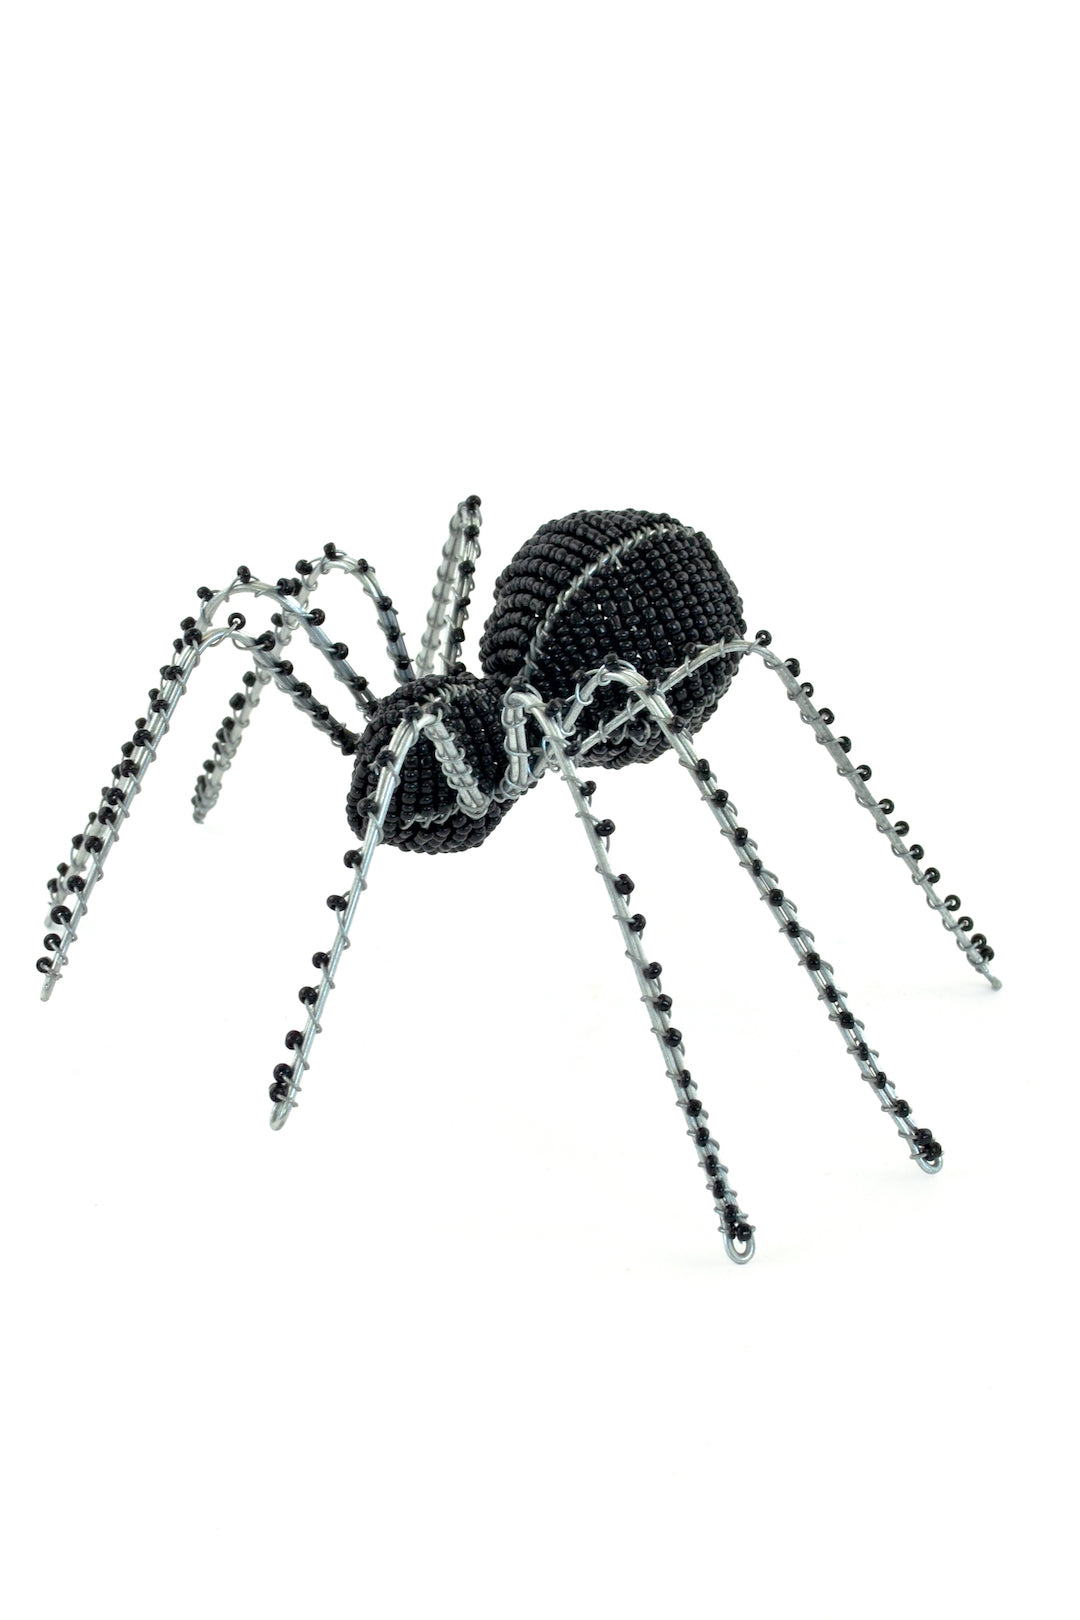 Beaded Black Spider Sculpture